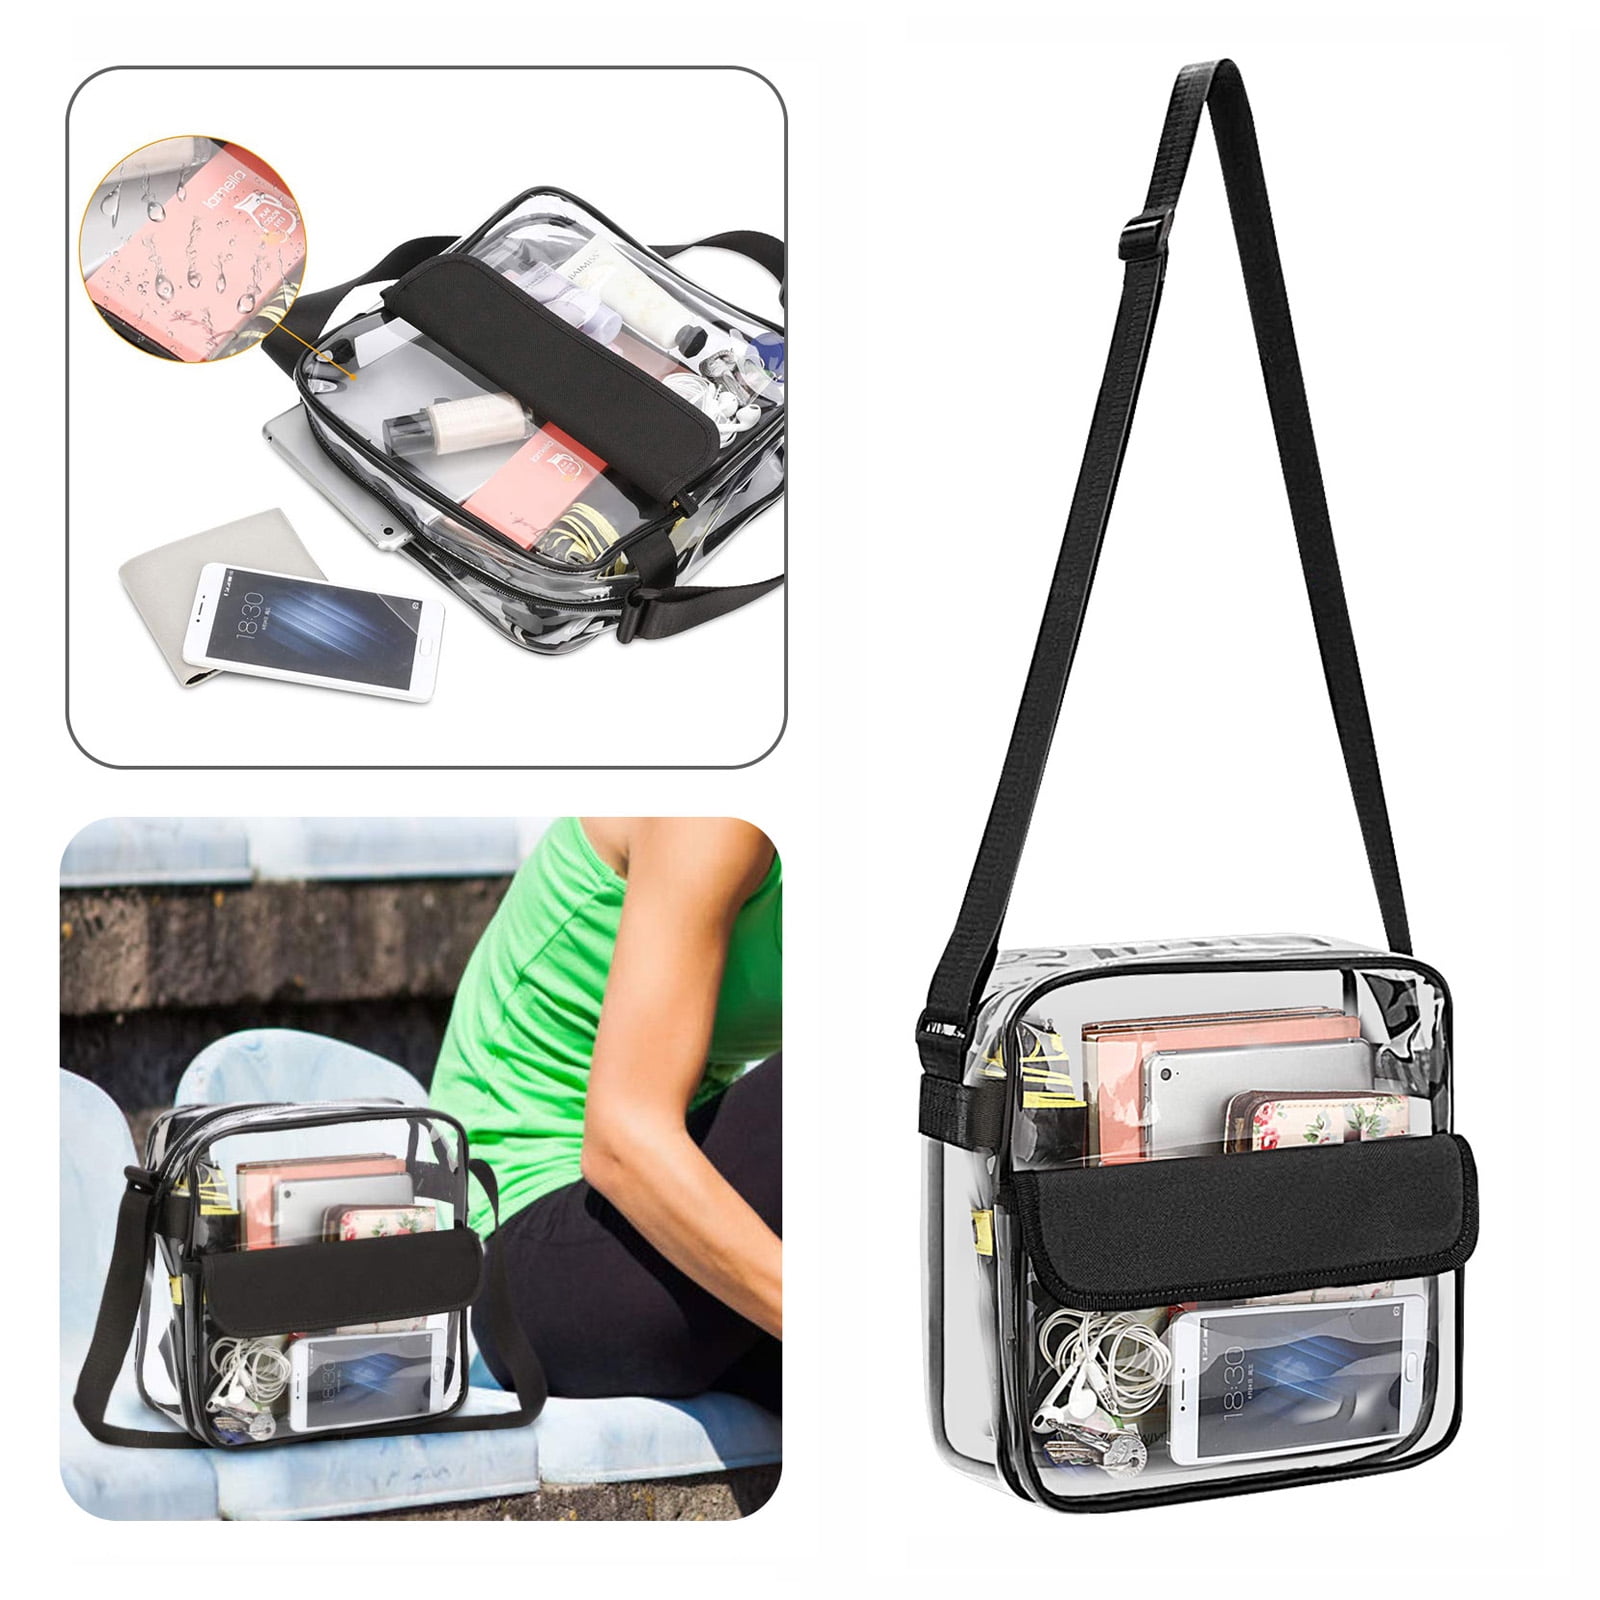 Auony Clear Stadium Bag Sport Gym Clear Crossbody Purse Vinyl Bag with Adjustable Cross-Body Strap & Handle for Work 